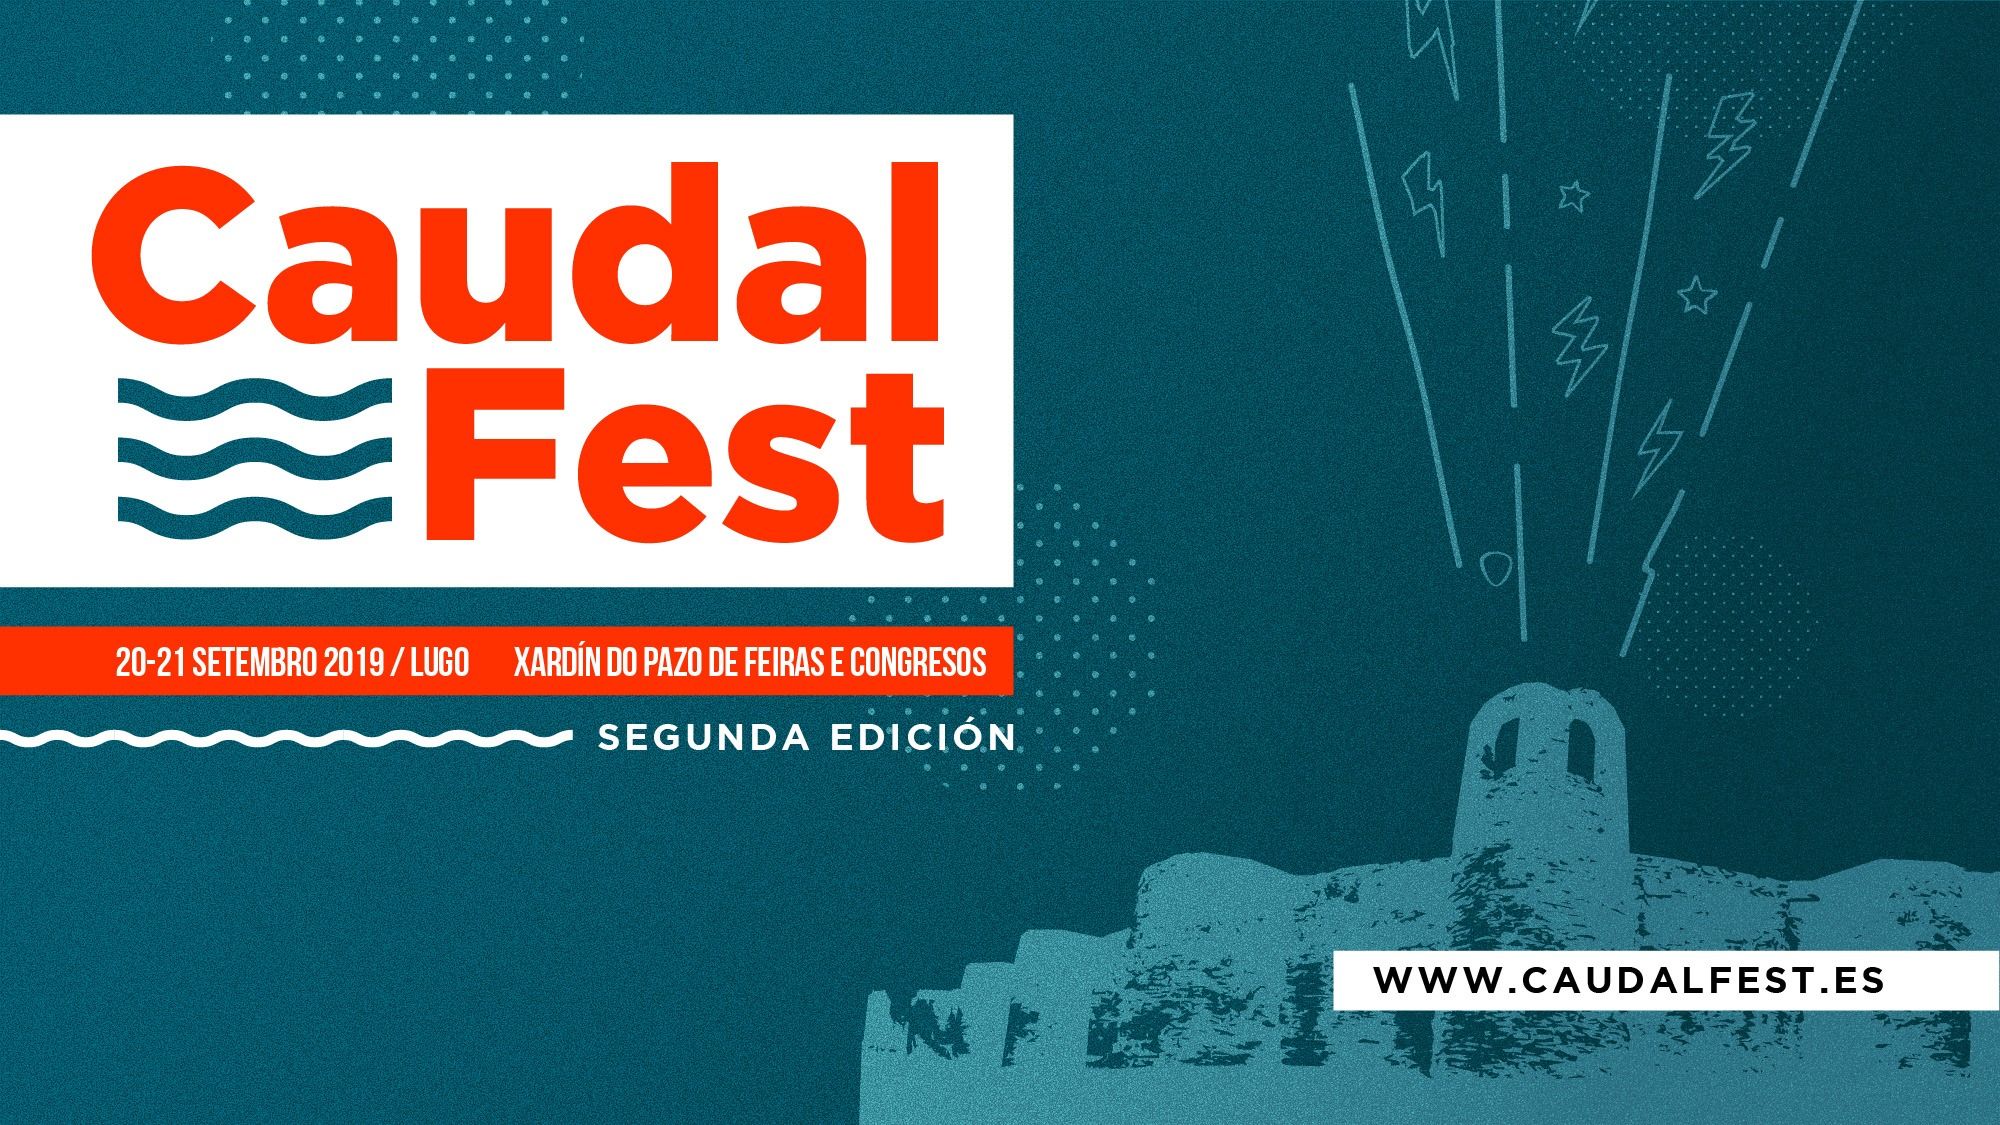 Caudal Fest, ‘el útlimo gran festival del verano’